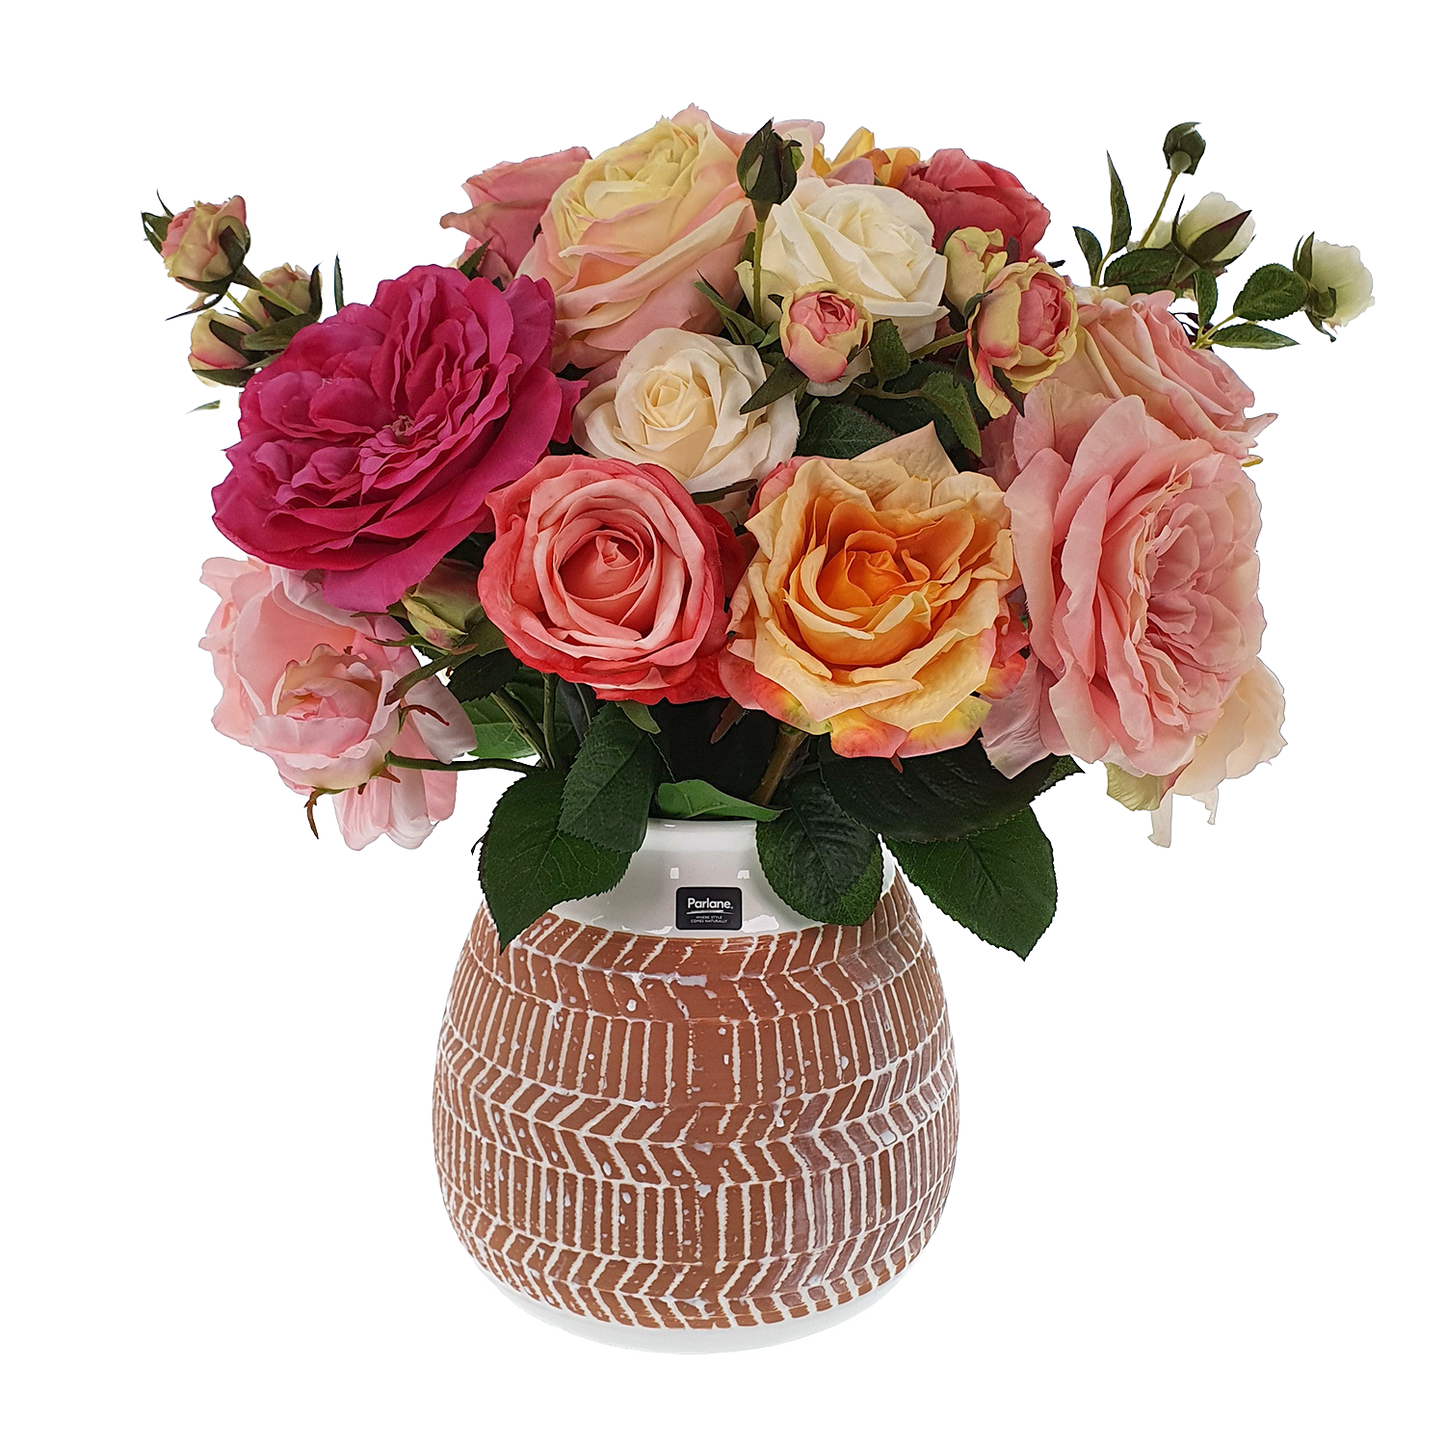 Viv! Home Luxuries Kunstbloem Boeket Rose Garden - inclusief vaas - perzik roze geel wit